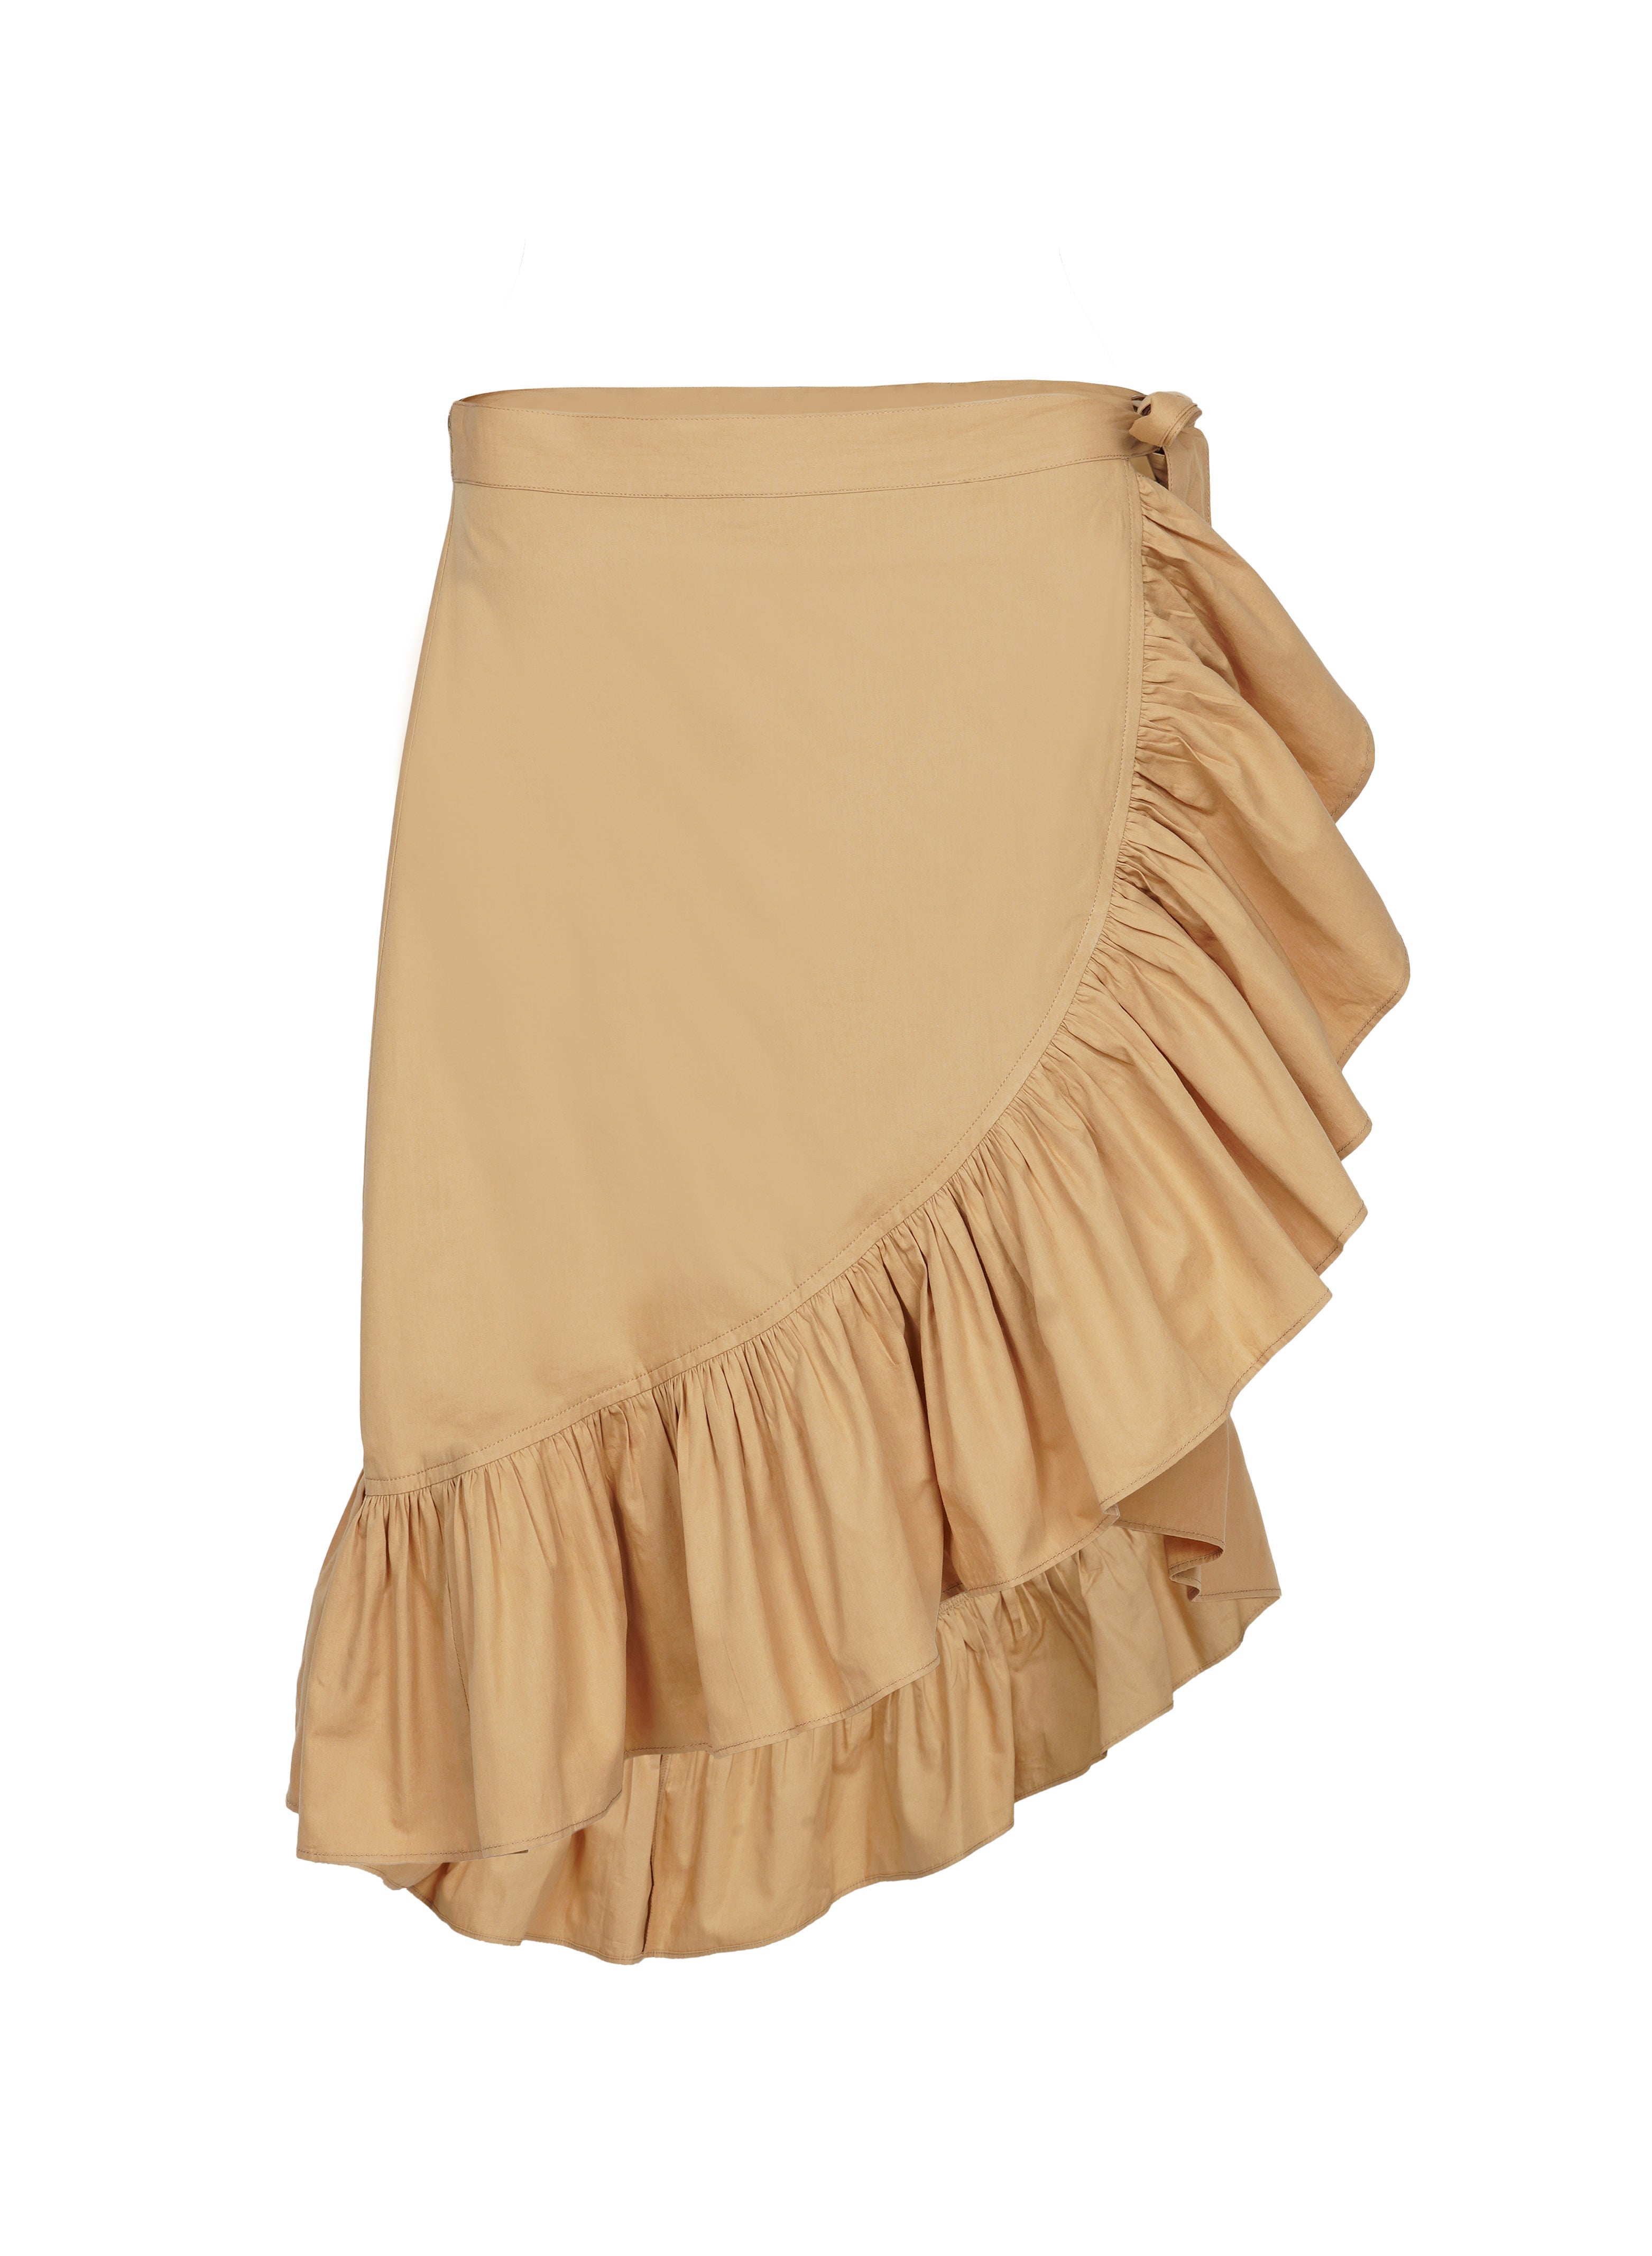 Wey Skirt  (60% off - use code MALIE60)